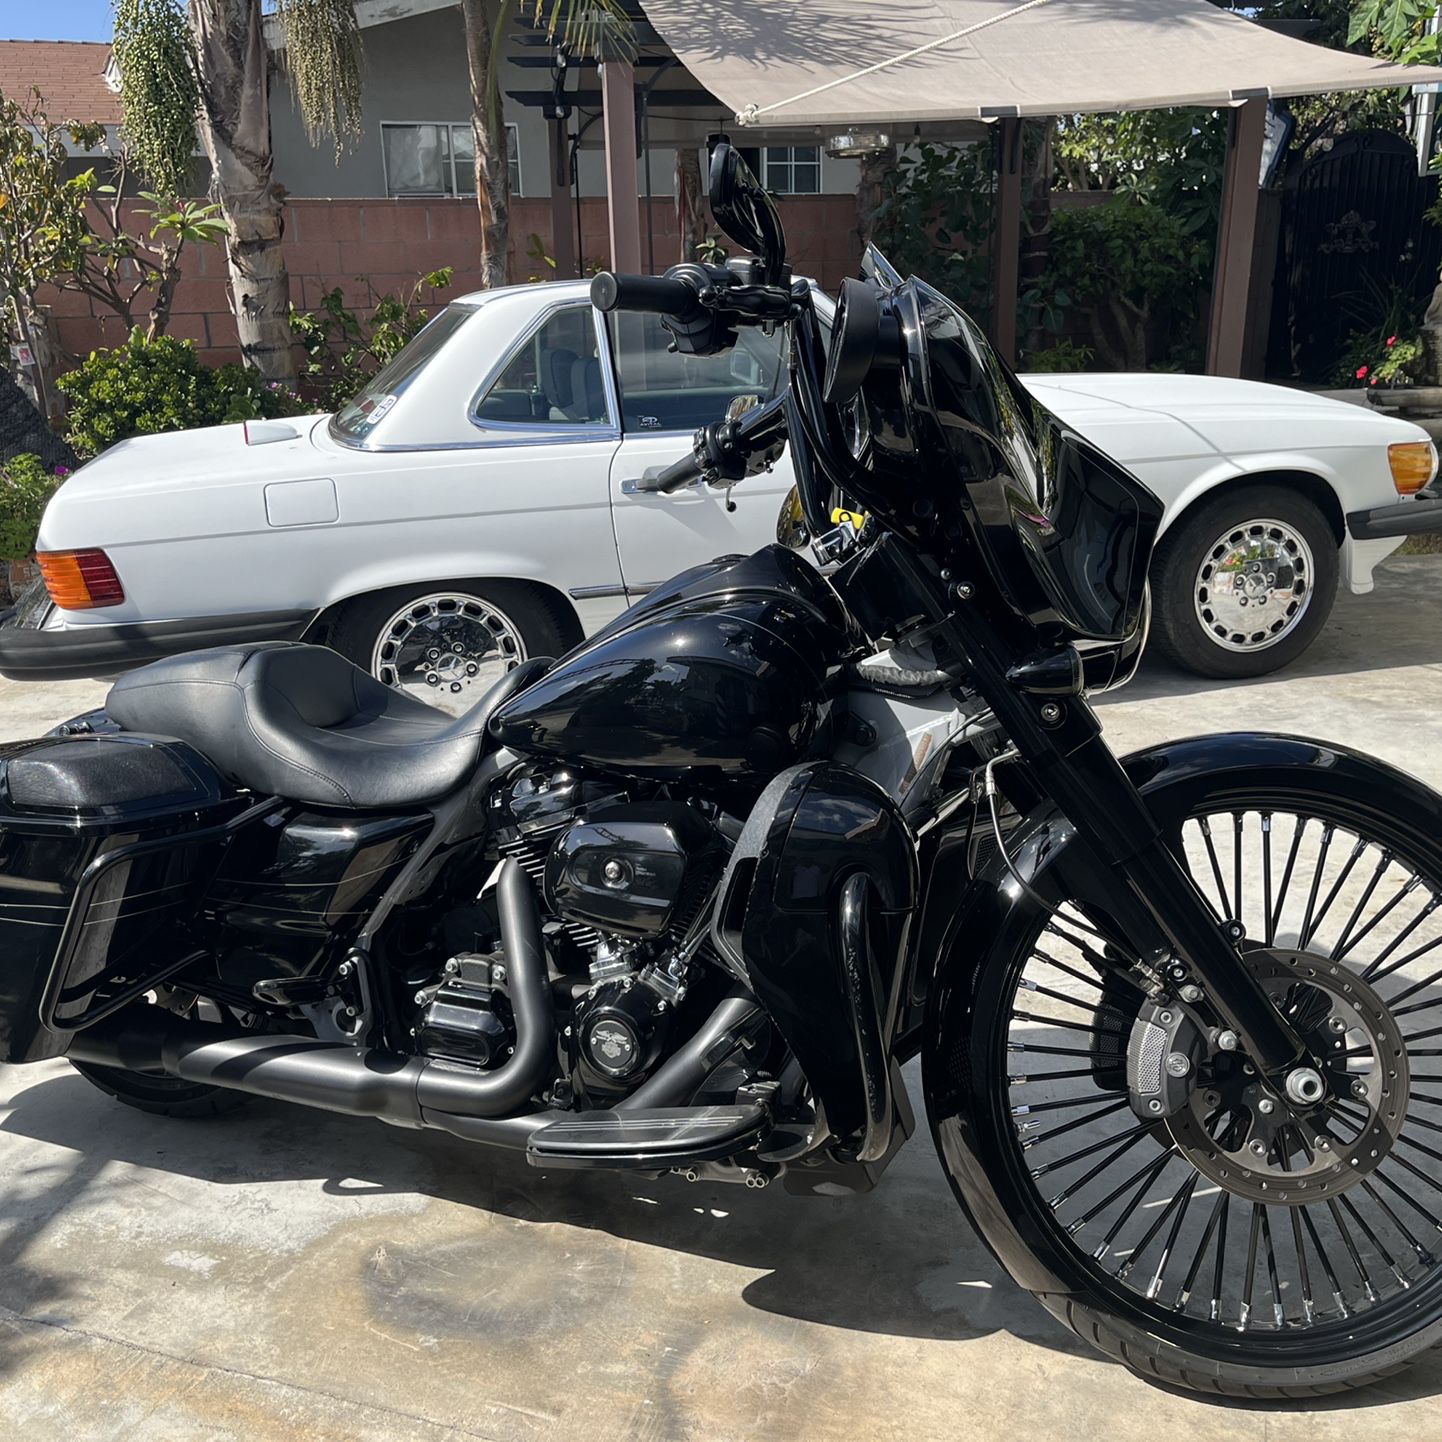 2018 Street Glide Harley Davidson